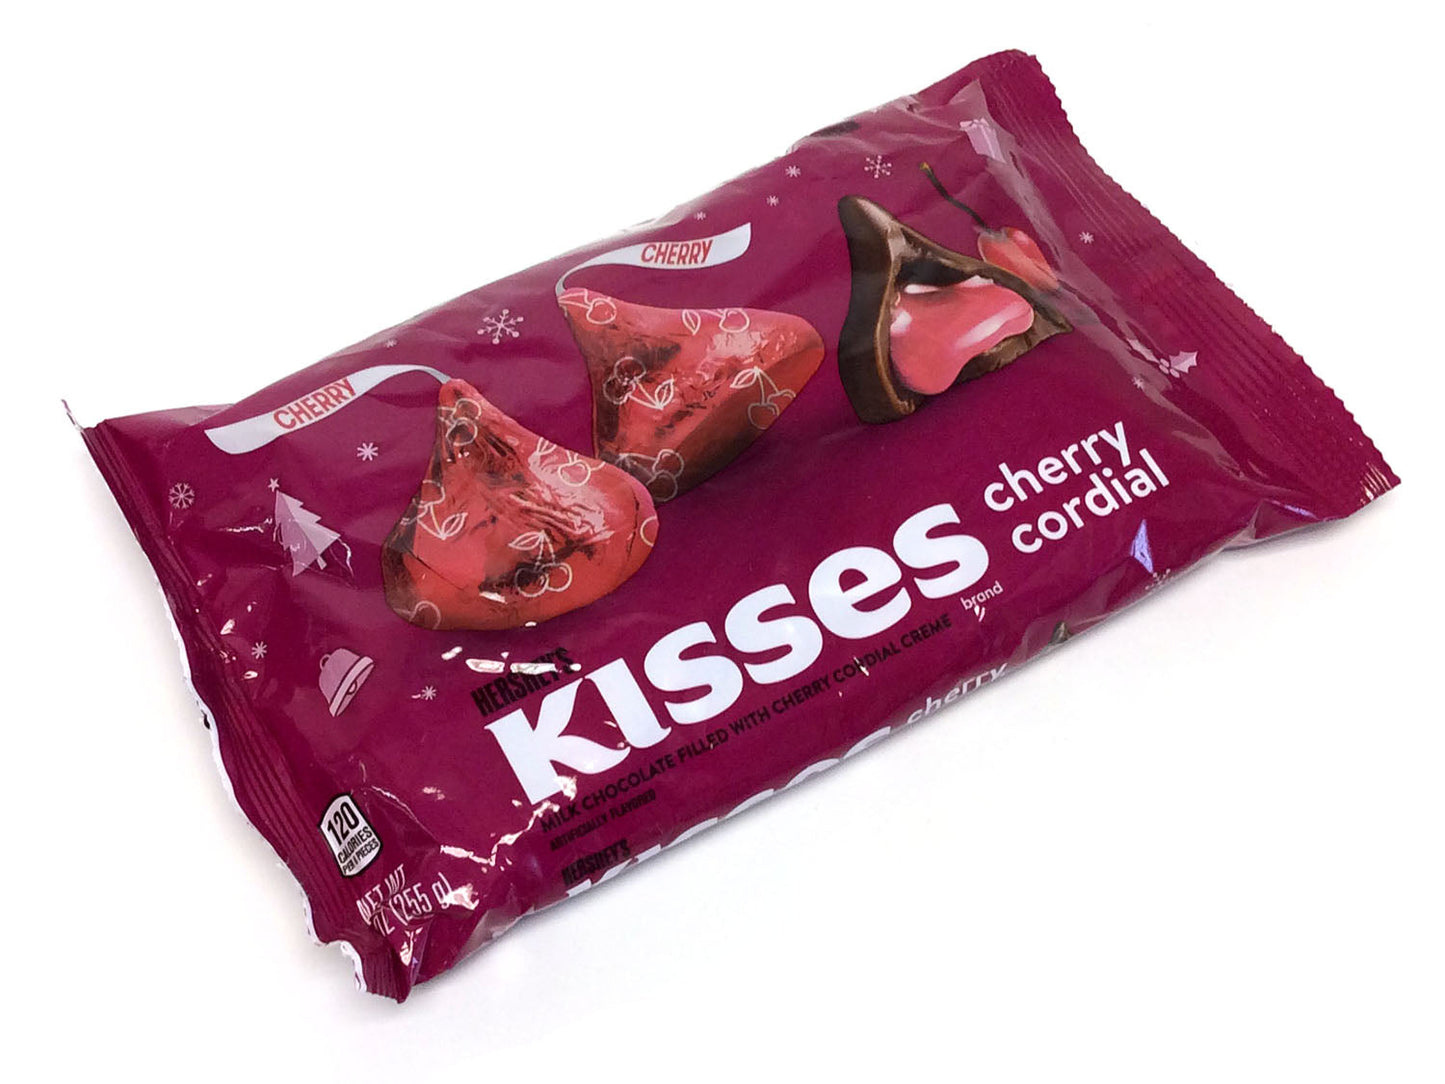 Hershey's Kisses - Cherry Cordial - 9 oz bag